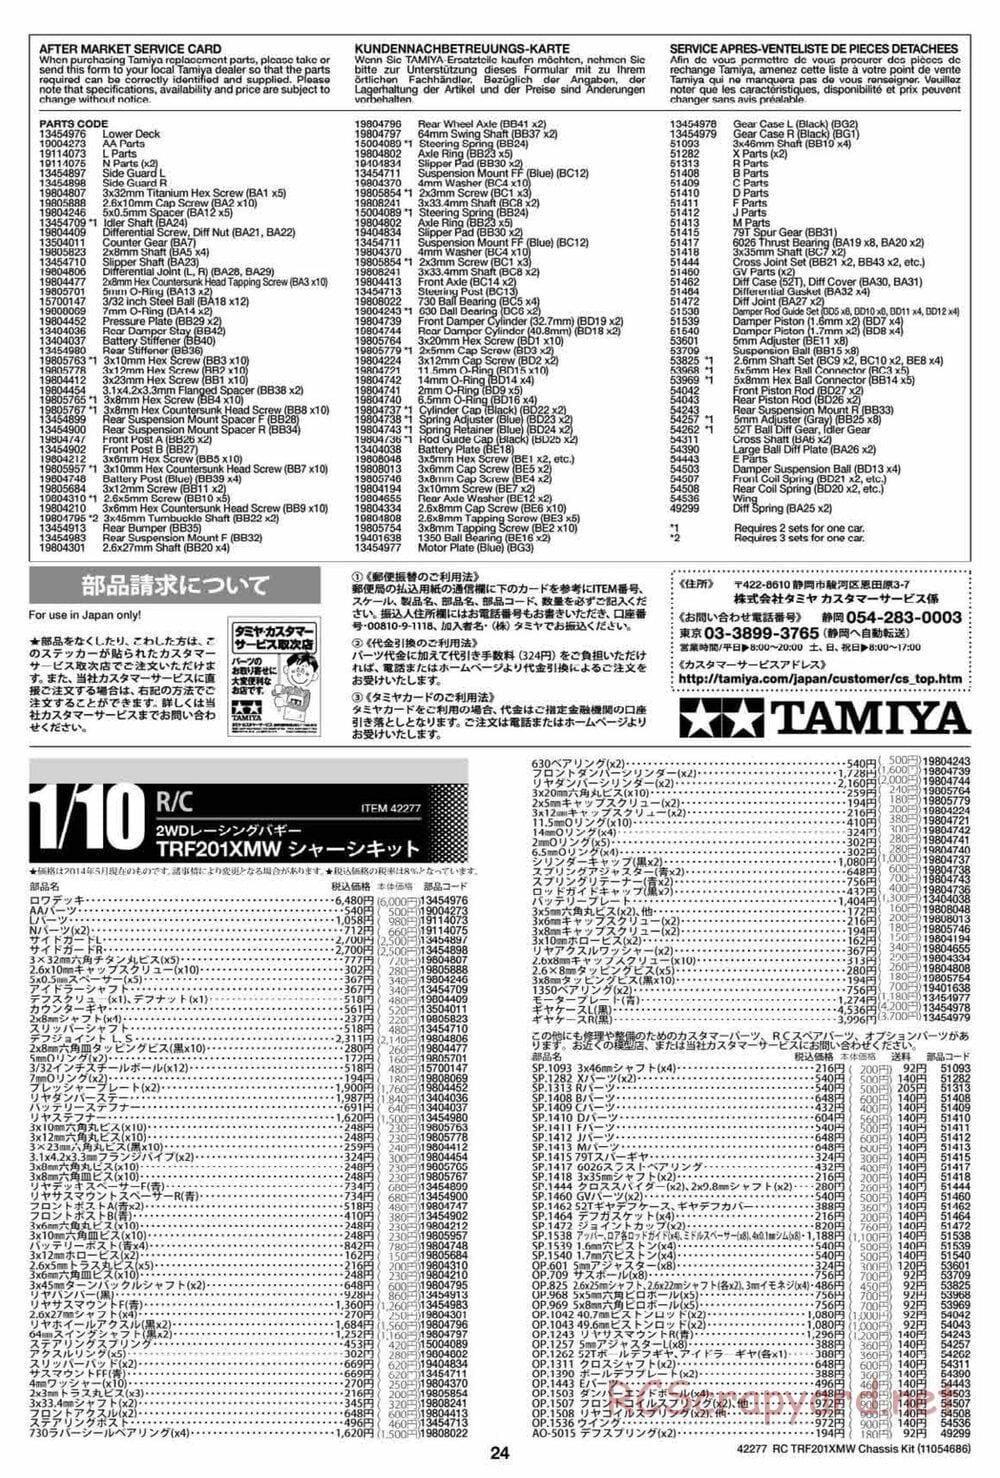 Tamiya - TRF201XMW Chassis - Manual - Page 24